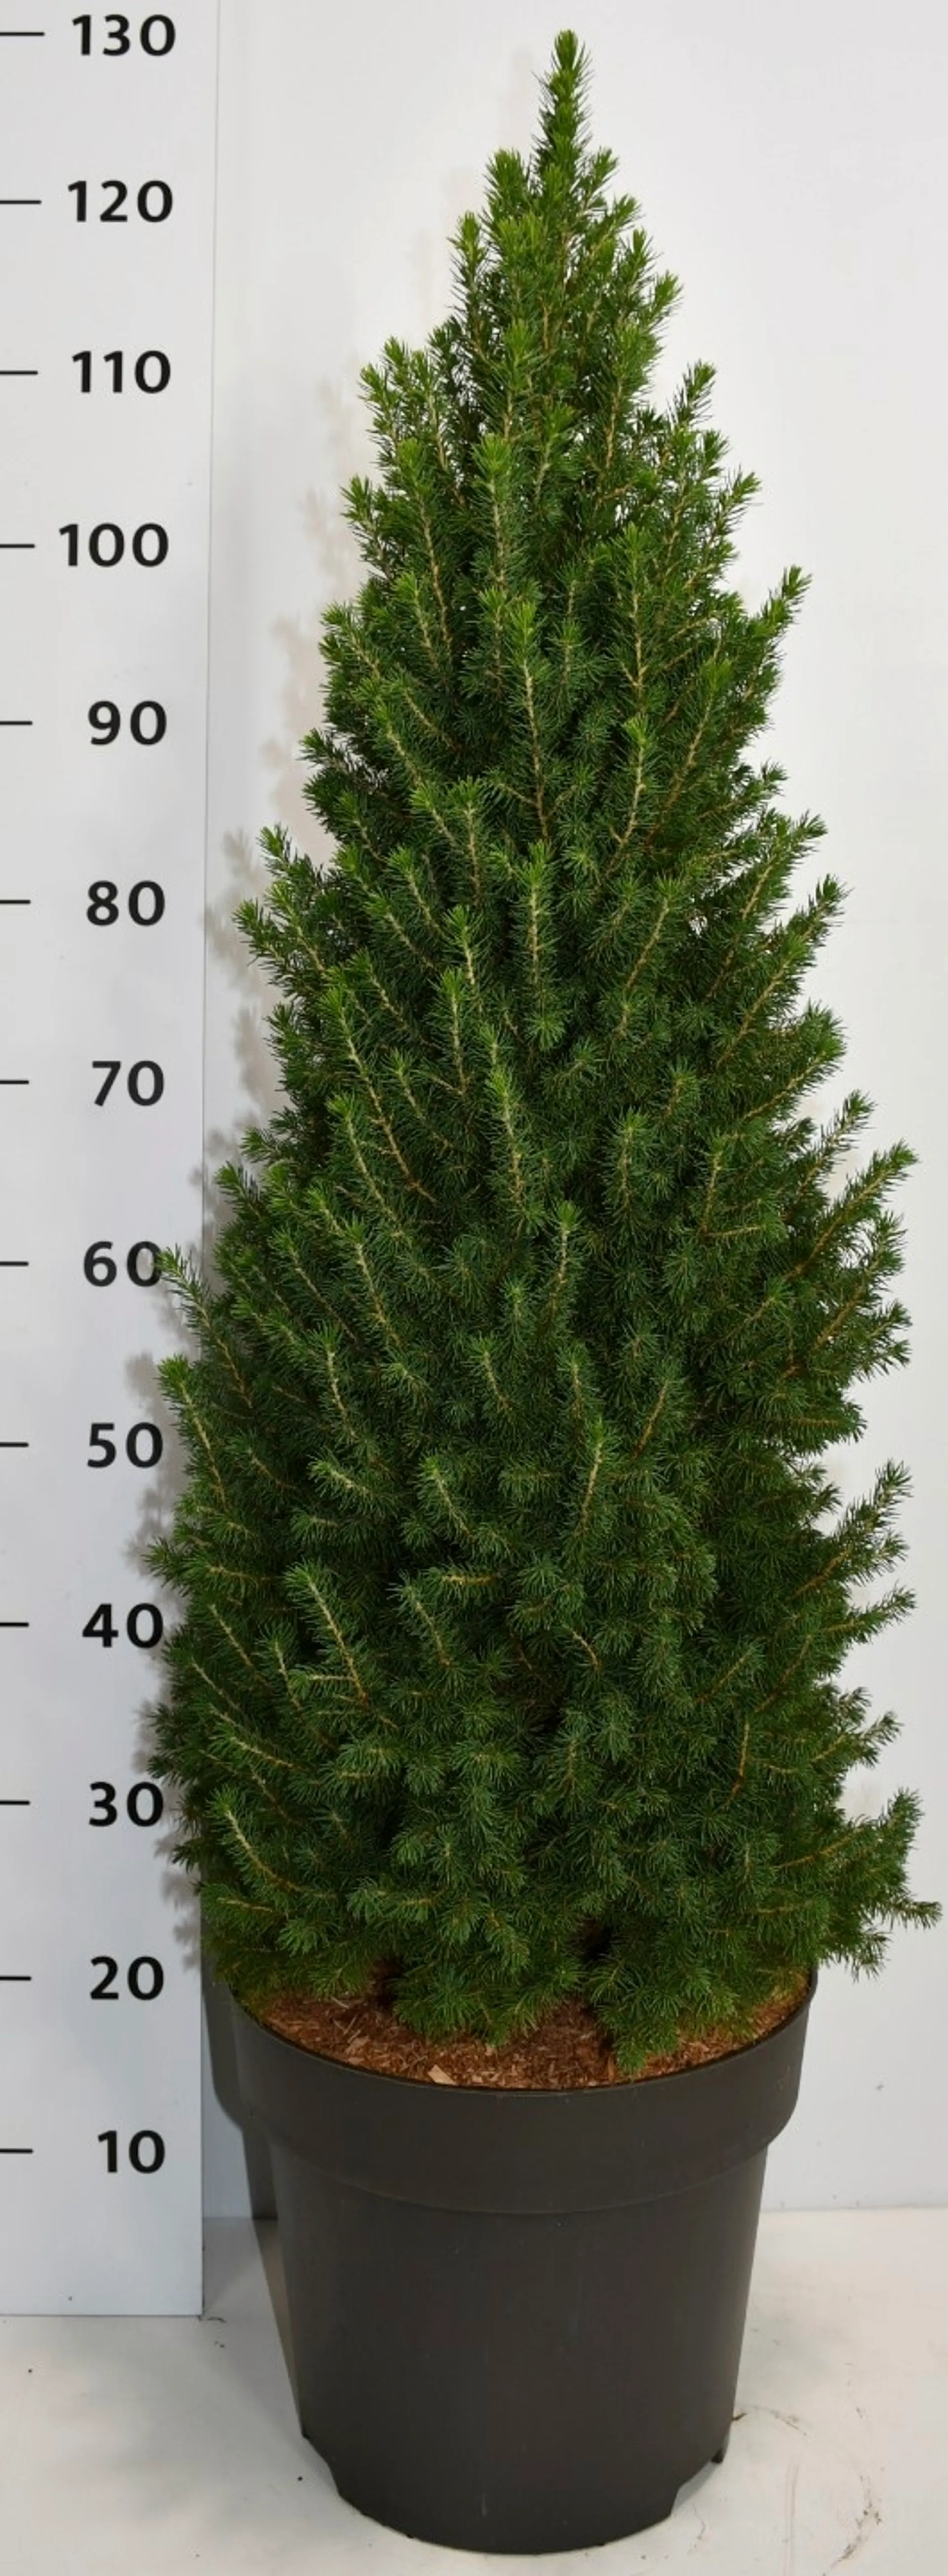 Kartiovalkokuusi 'Conica' 80-90 cm astiataimi 12 l ruukku Picea glauca 'Conica'